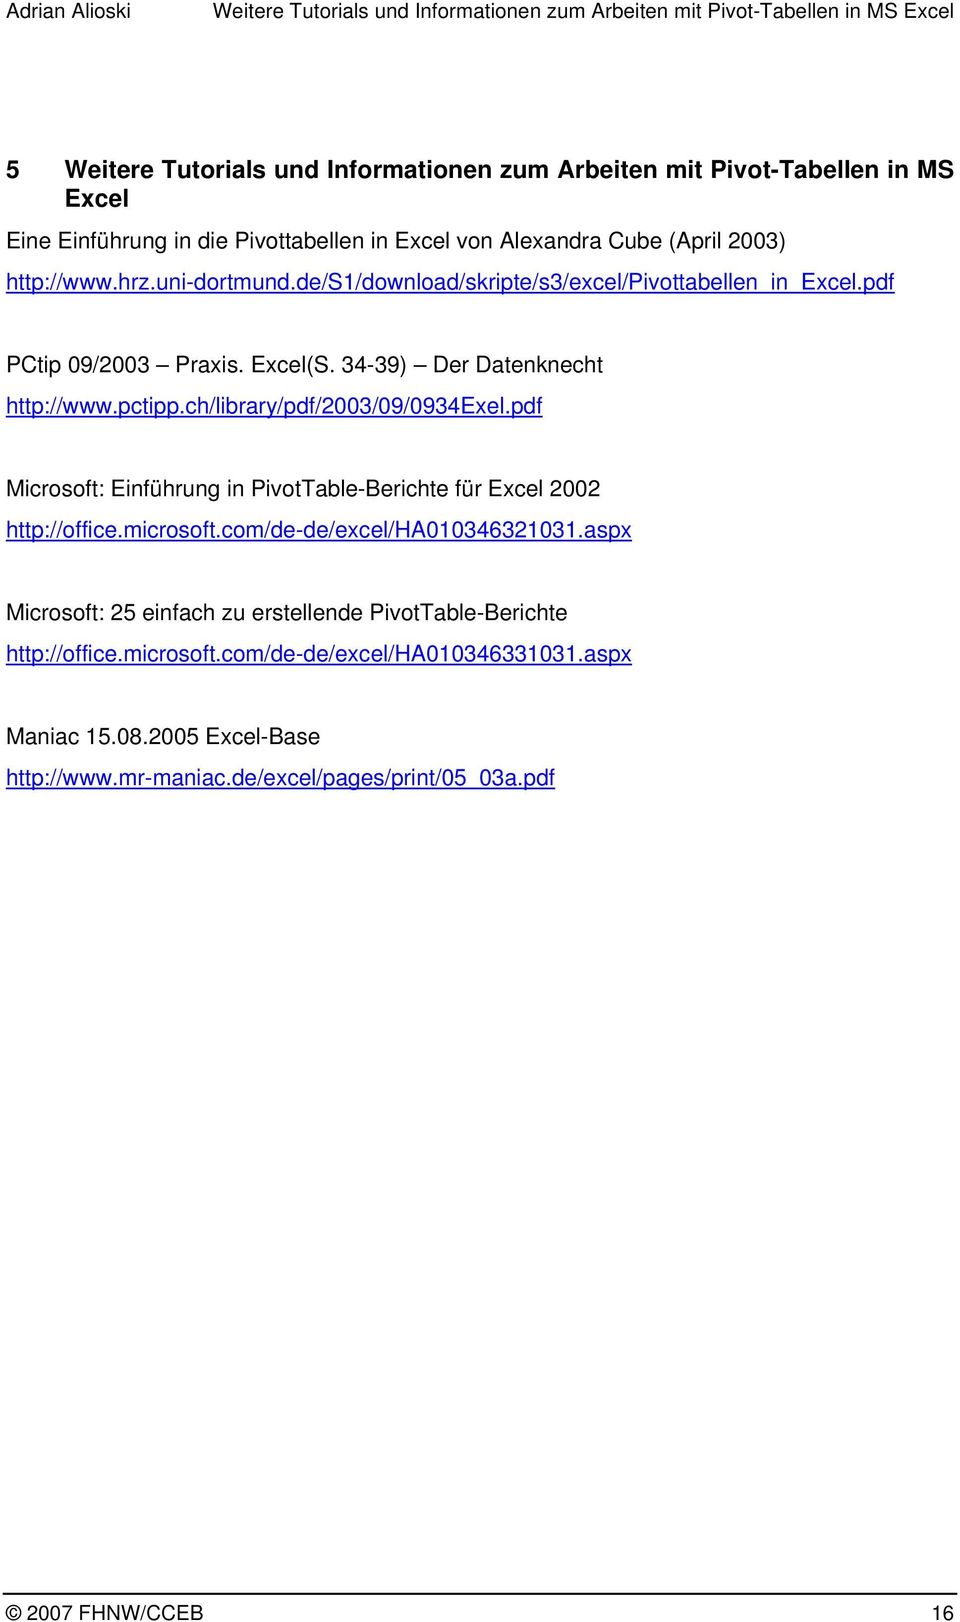 34-39) Der Datenknecht http://www.pctipp.ch/library/pdf/2003/09/0934exel.pdf Microsoft: Einführung in PivotTable-Berichte für Excel 2002 http://office.microsoft.com/de-de/excel/ha010346321031.